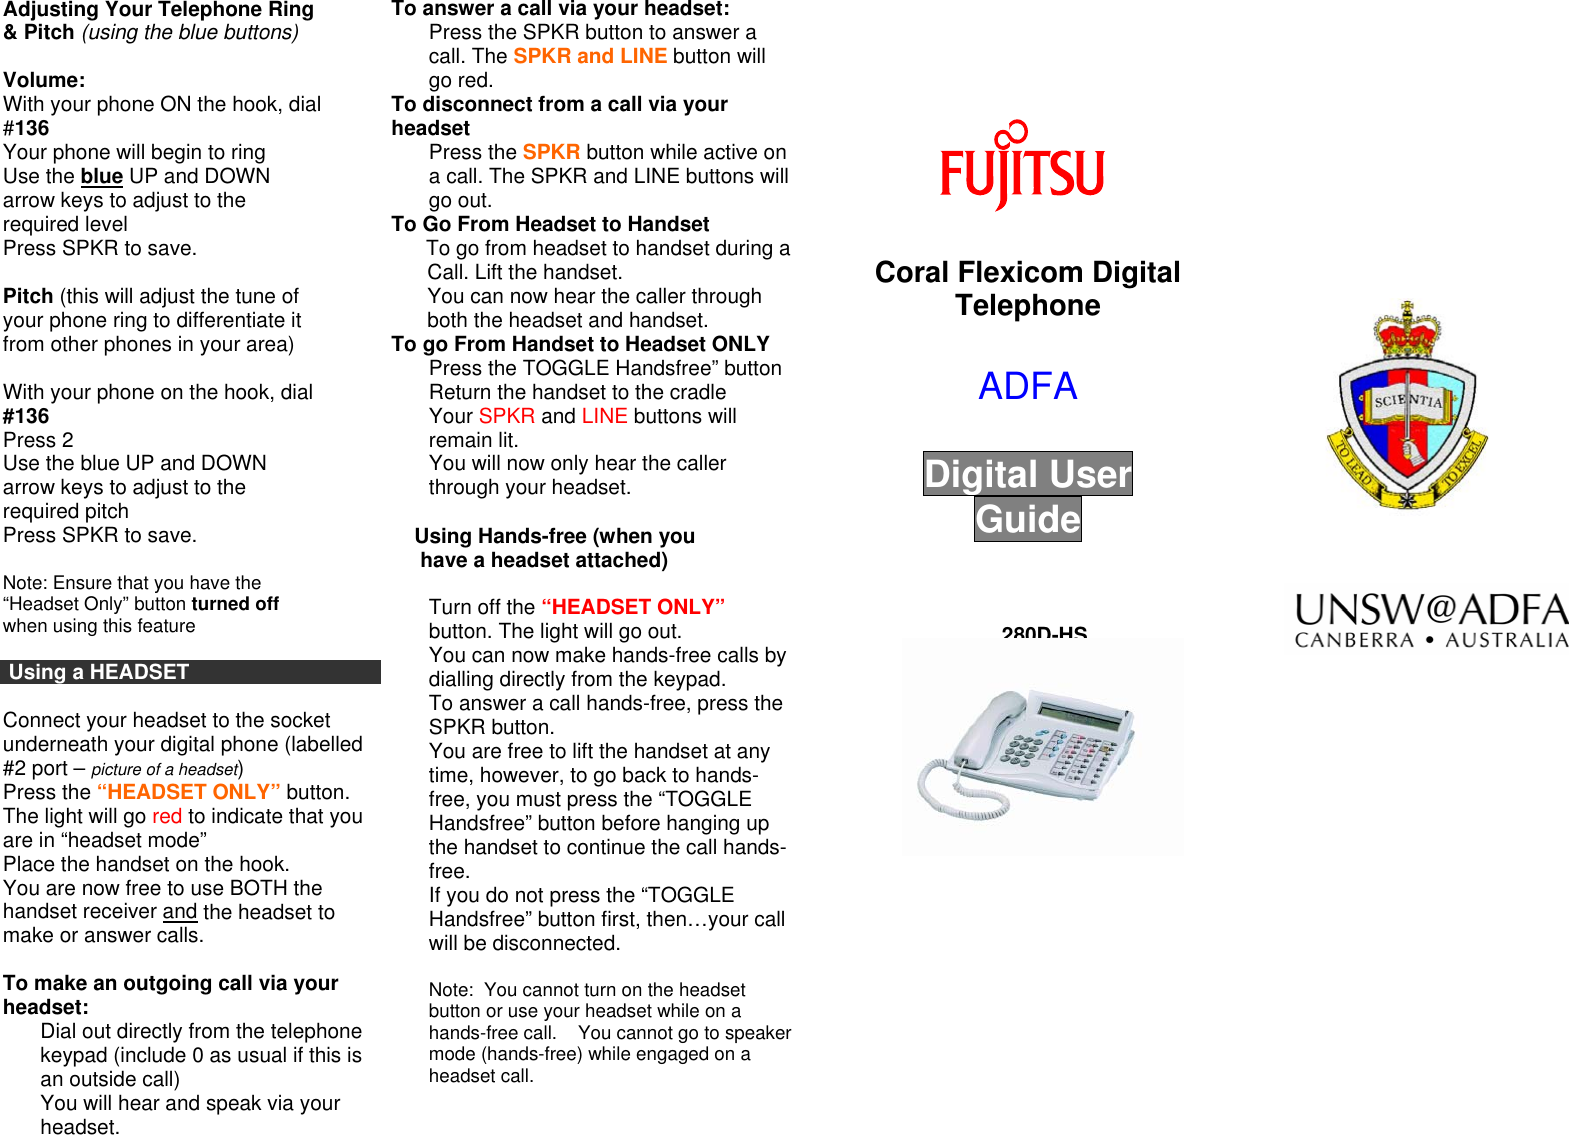 Page 1 of 2 - Fujitsu Fujitsu-280D-Hs-Users-Manual- UNSW@ADFA - Staff Gateway Digital Handset User Guide  Fujitsu-280d-hs-users-manual